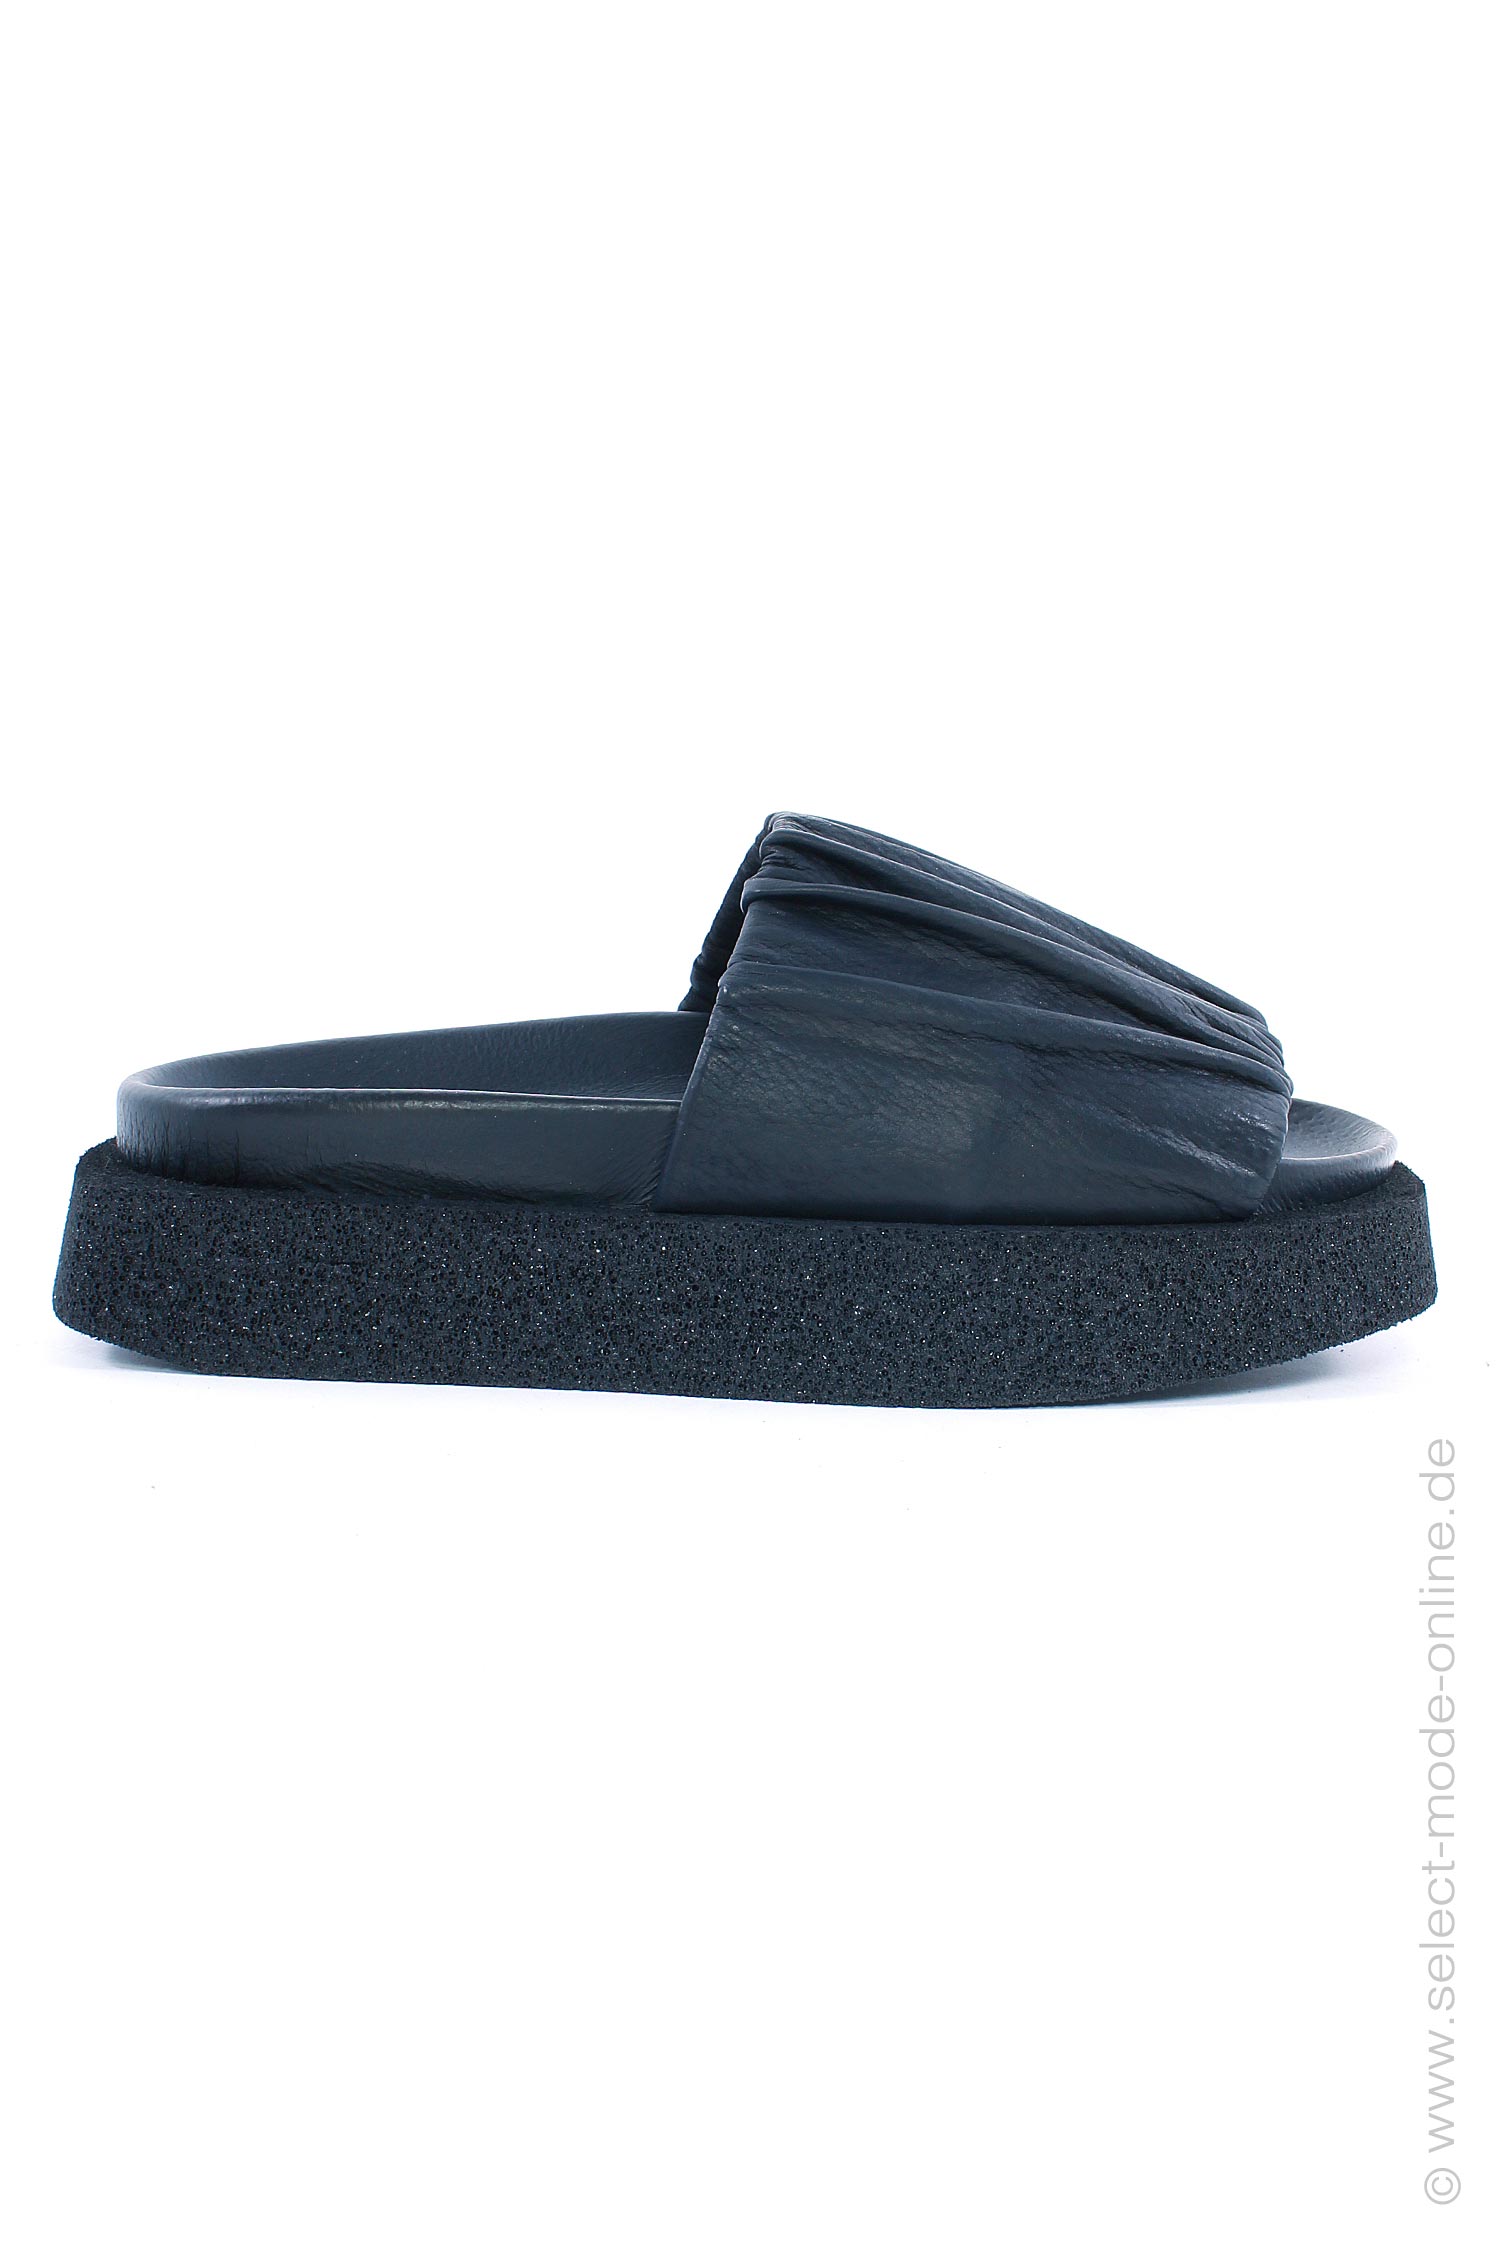 Sqaure sandals - Black - 5102